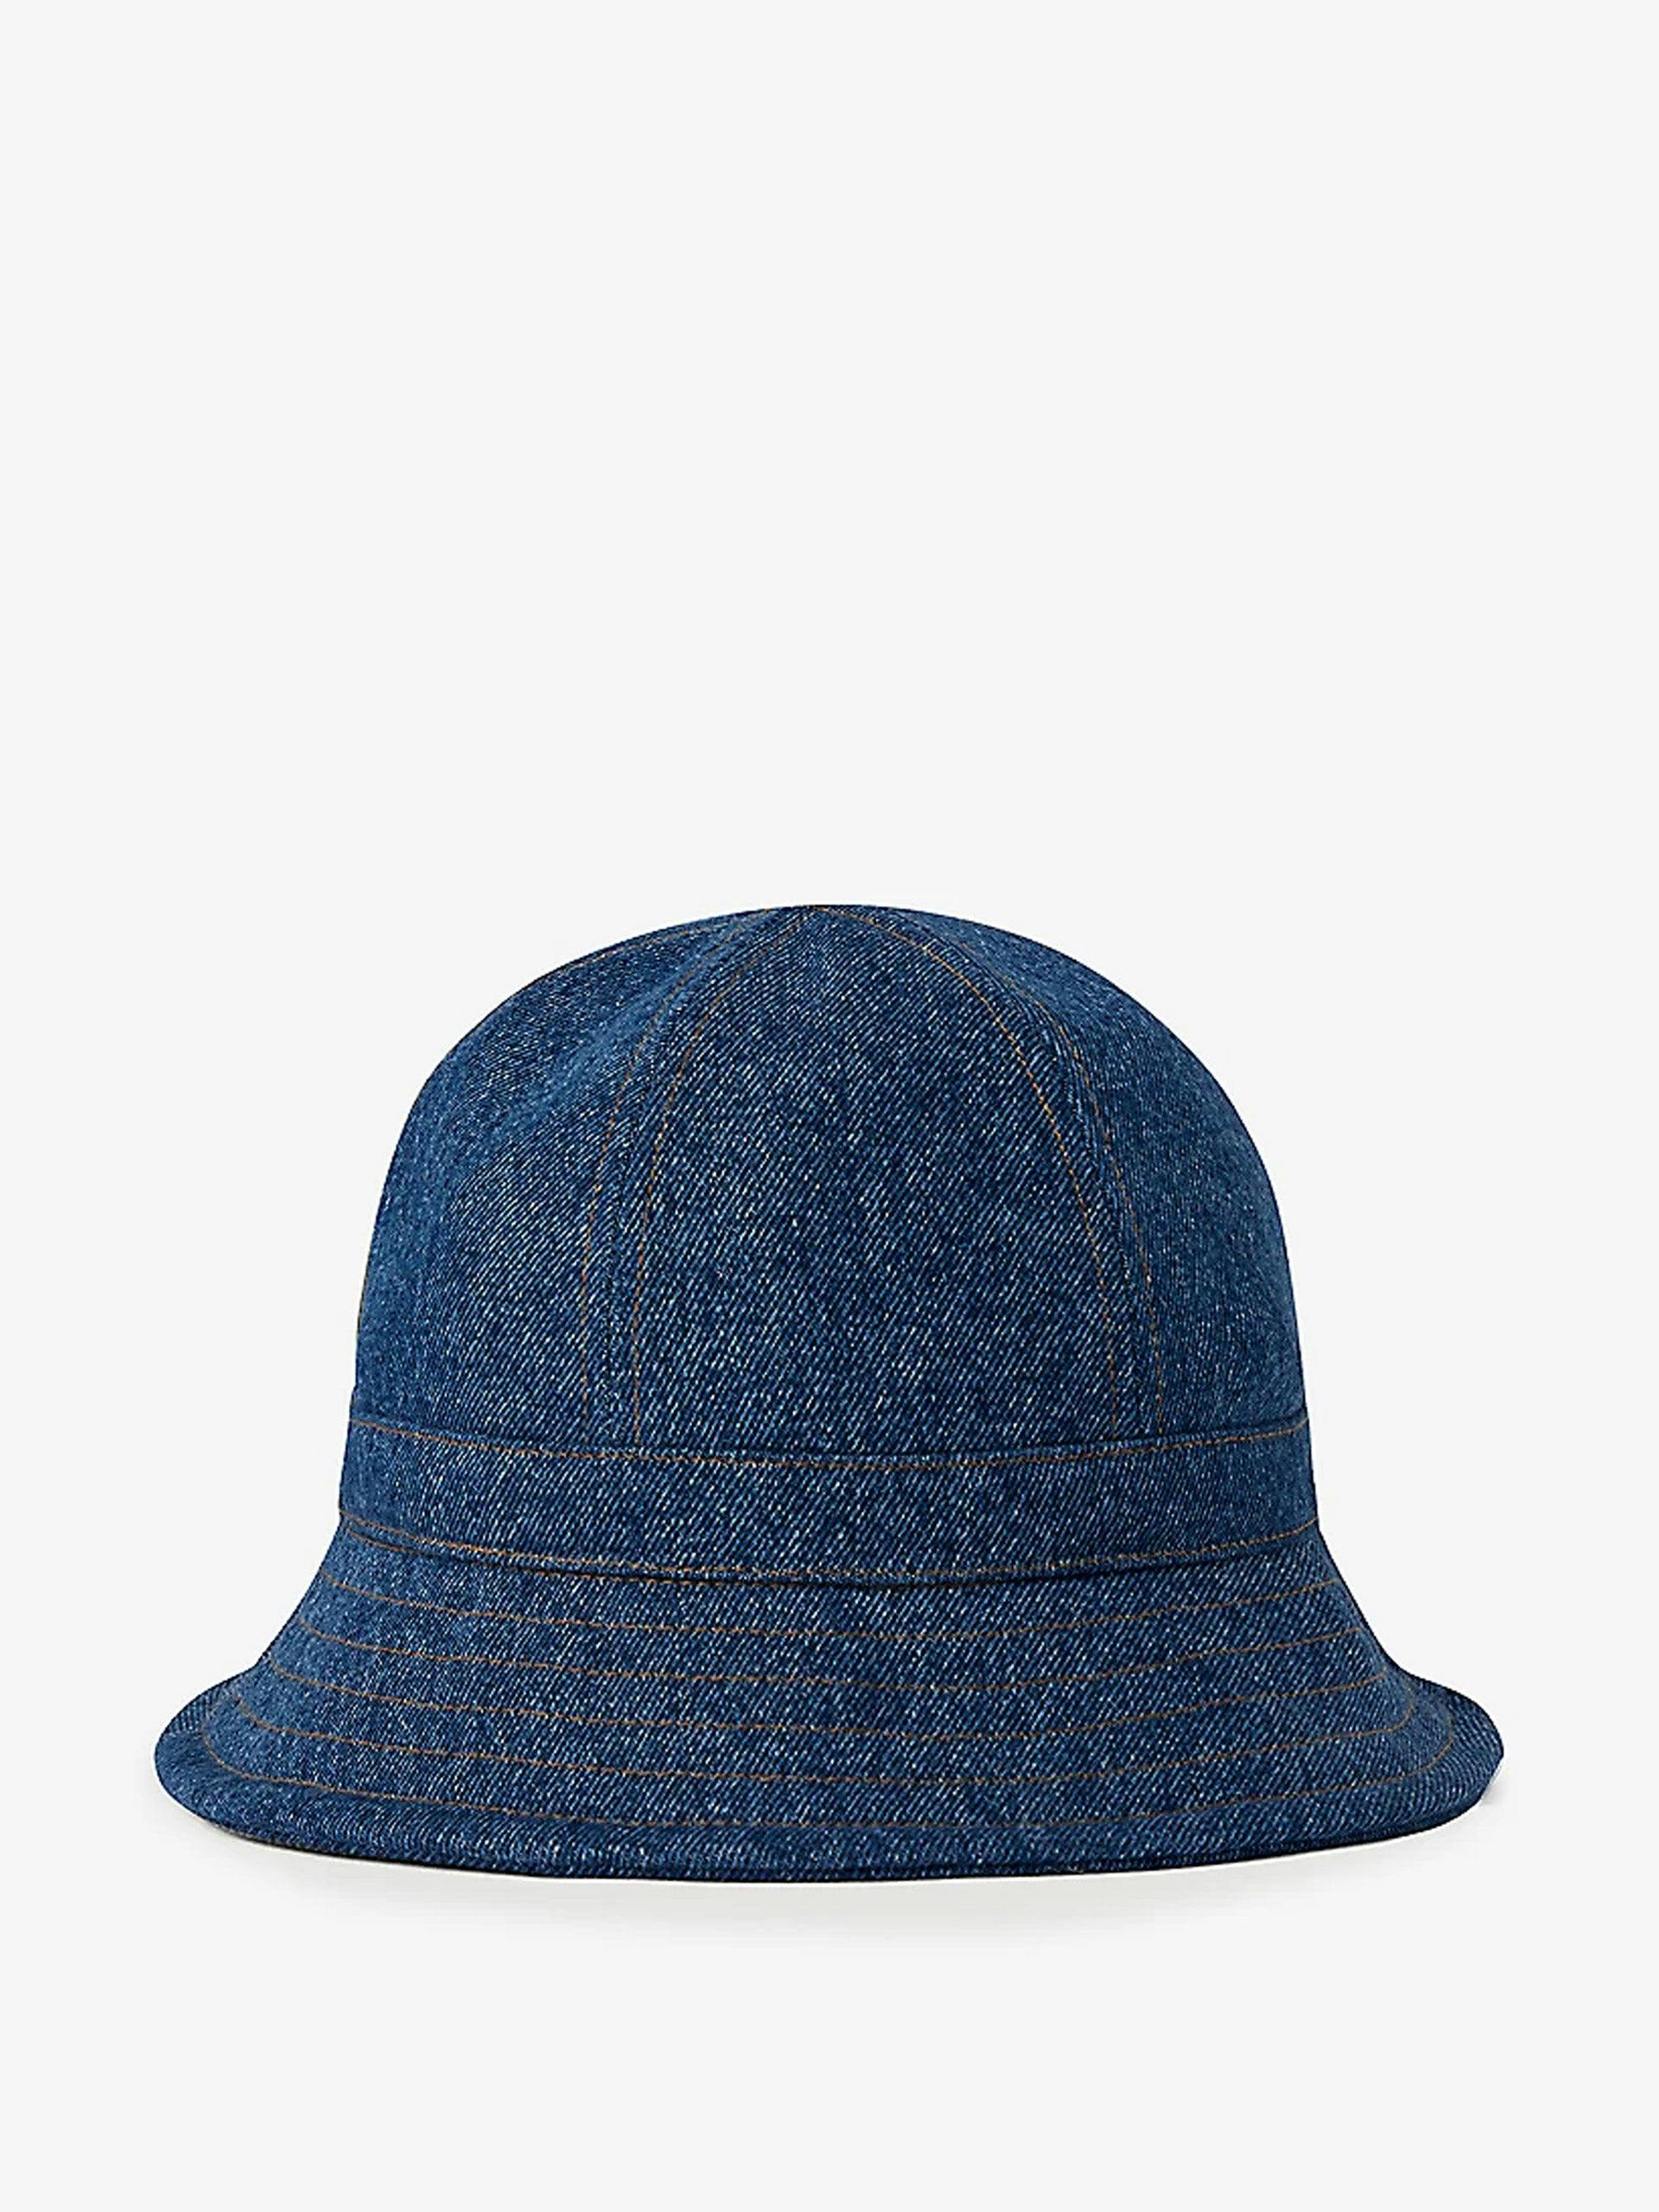 Dome-shaped denim hat